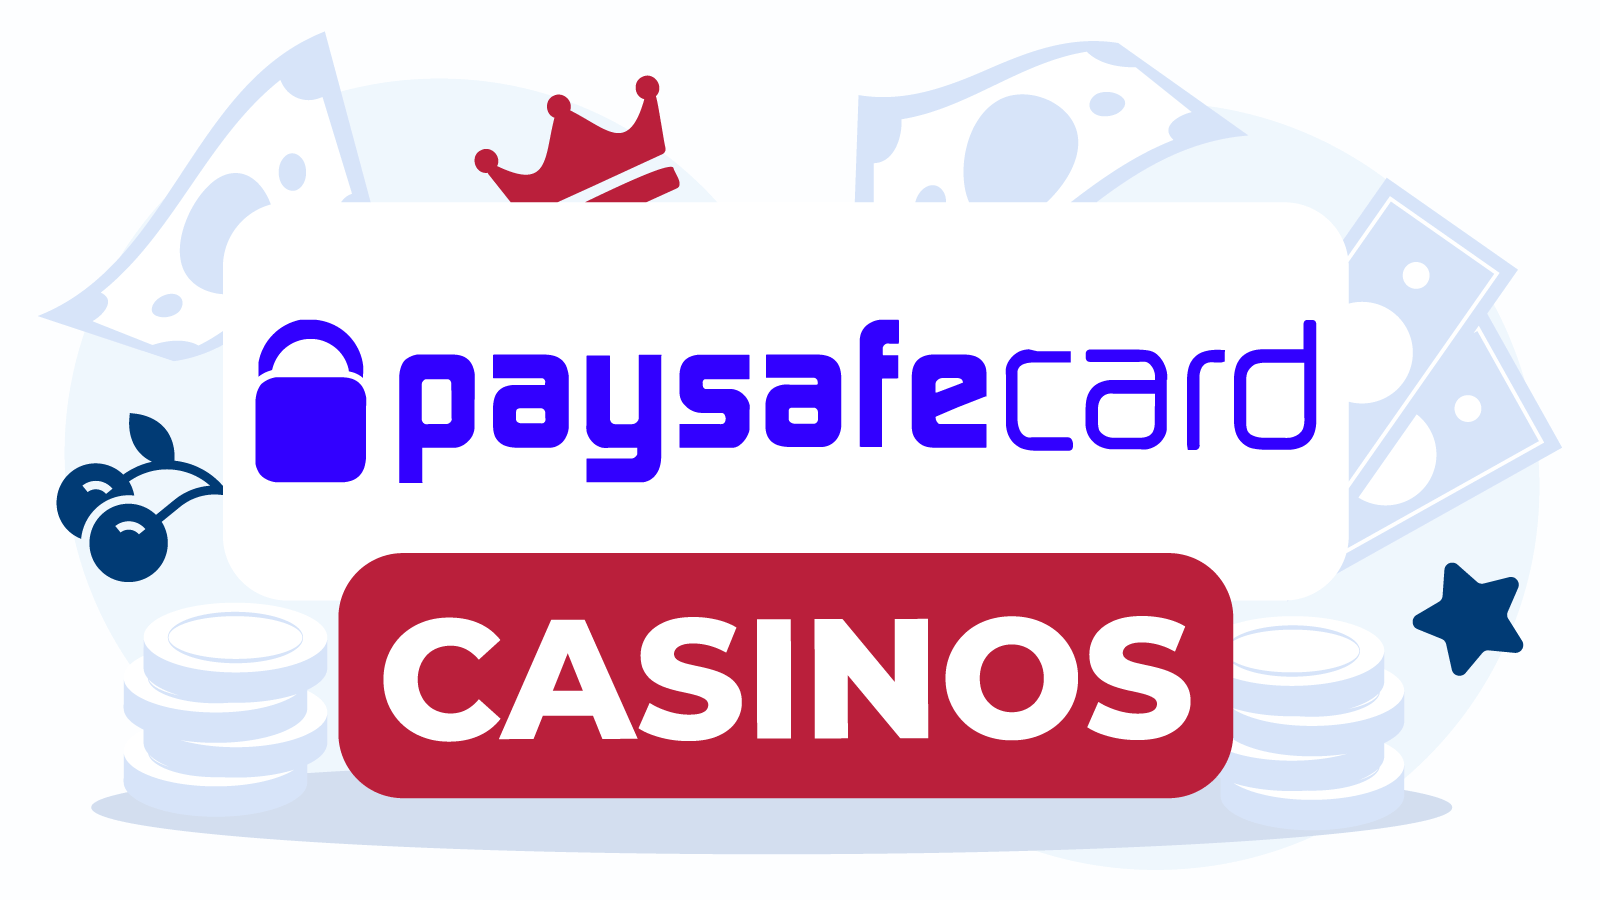 How To Turn PagoEfectivo in online casinos Into Success